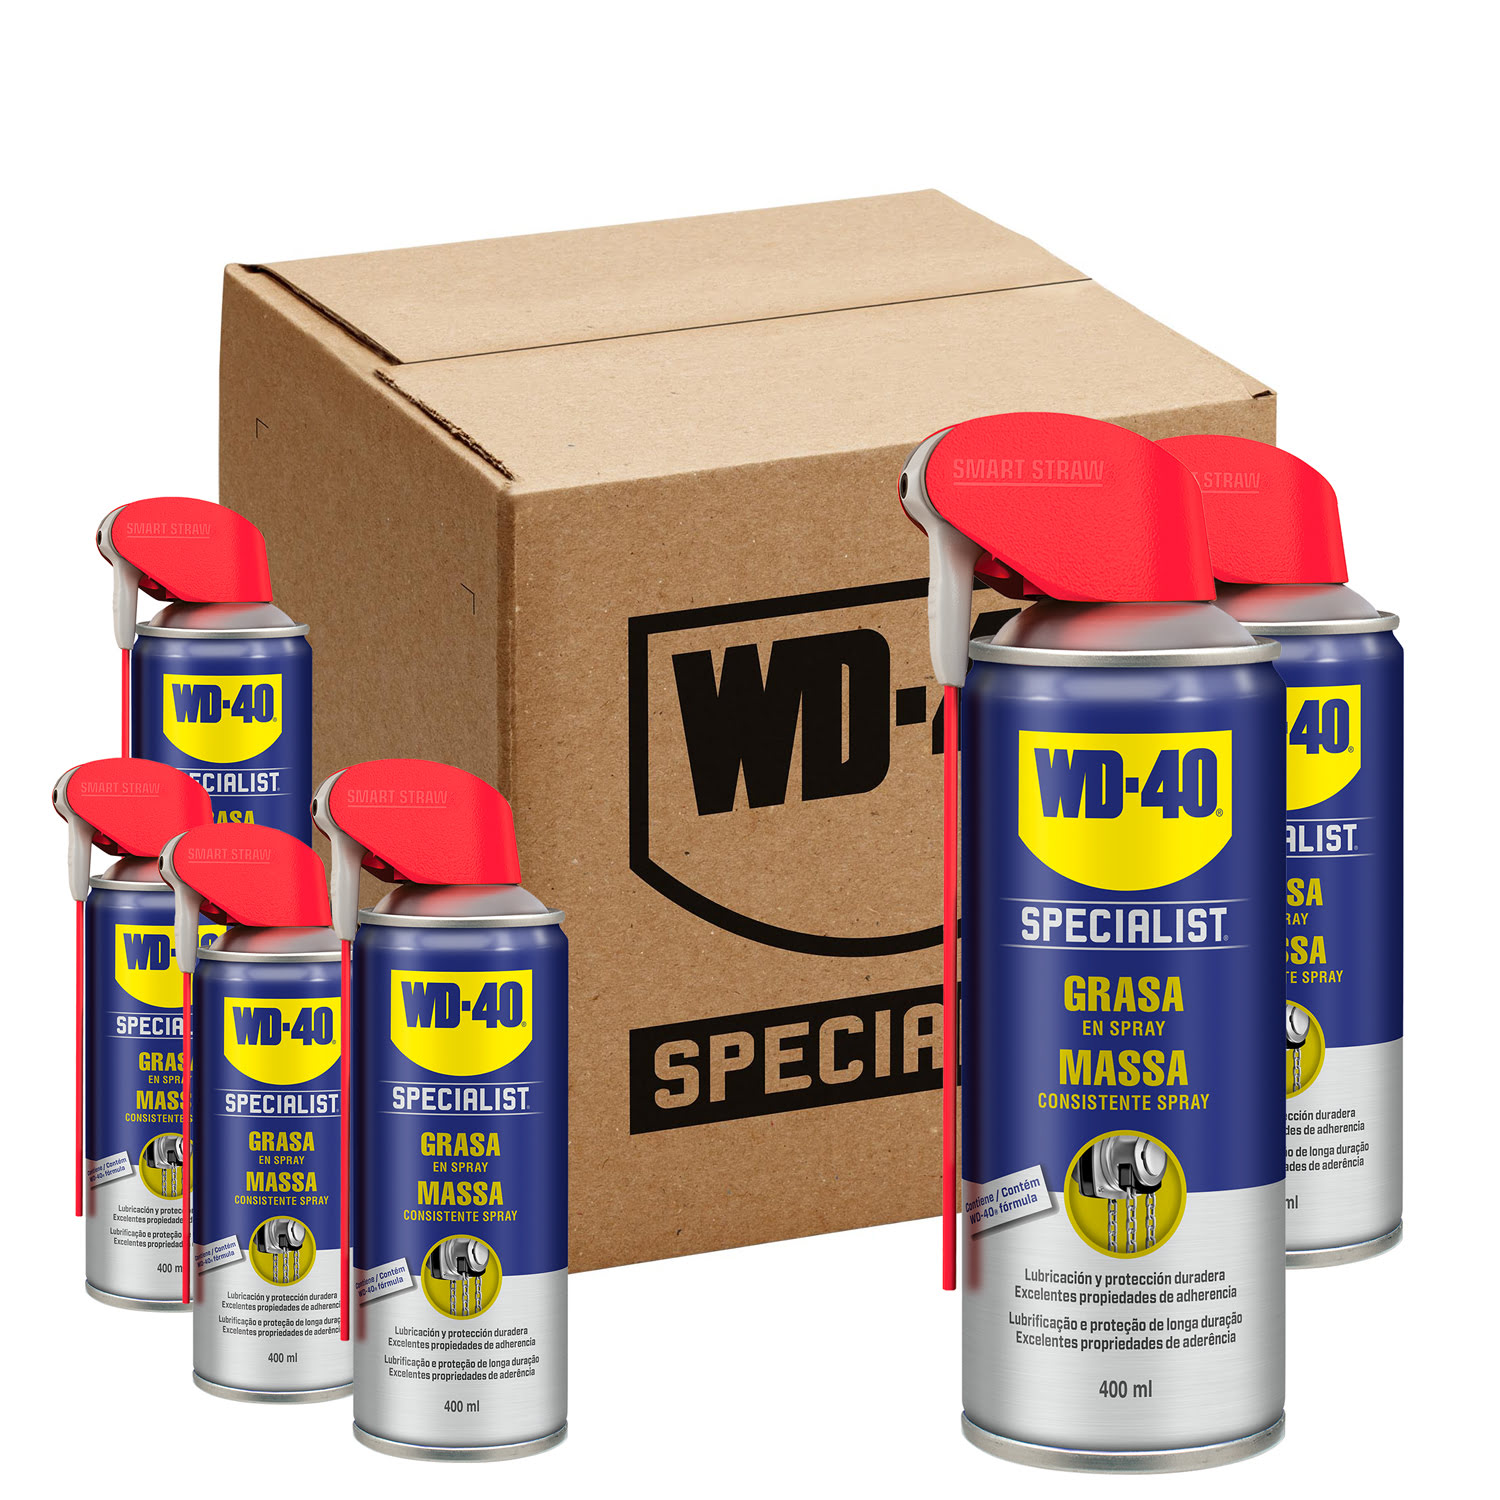 WD-40 SPECIALIST Massa em Spray 400ml x 1un WD-40® 